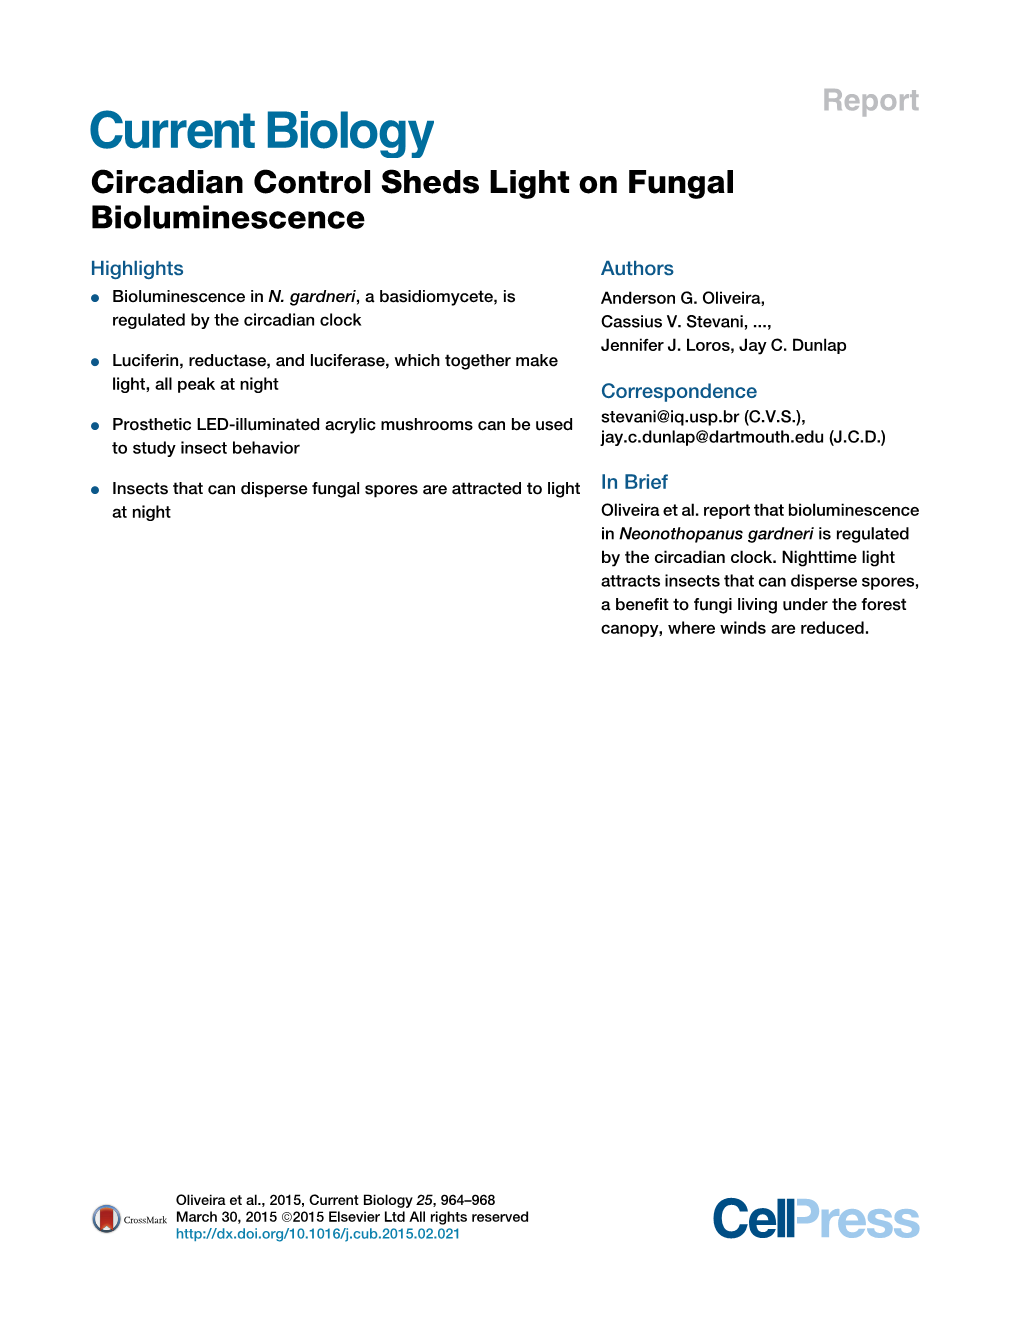 Circadian Control Sheds Light on Fungal Bioluminescence